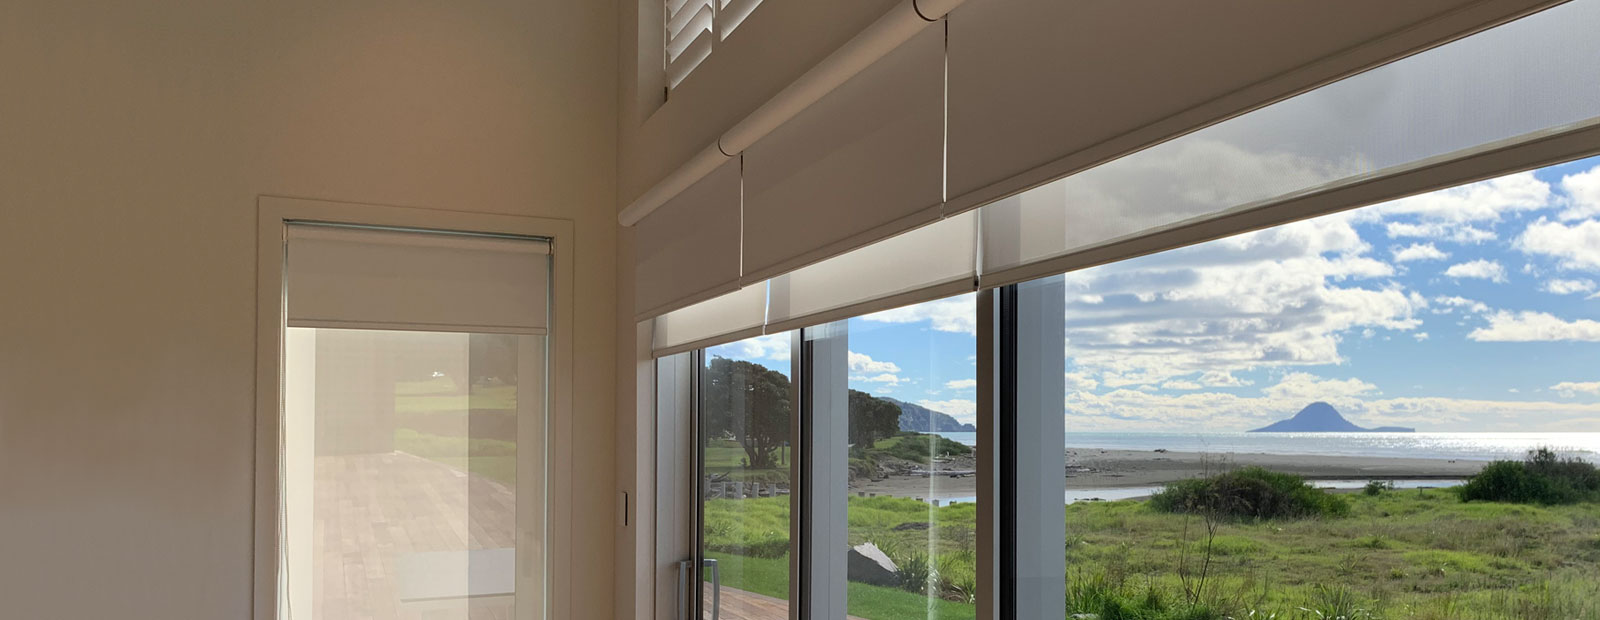 Blinds and Shutters installed in Whakatane and Tauranga